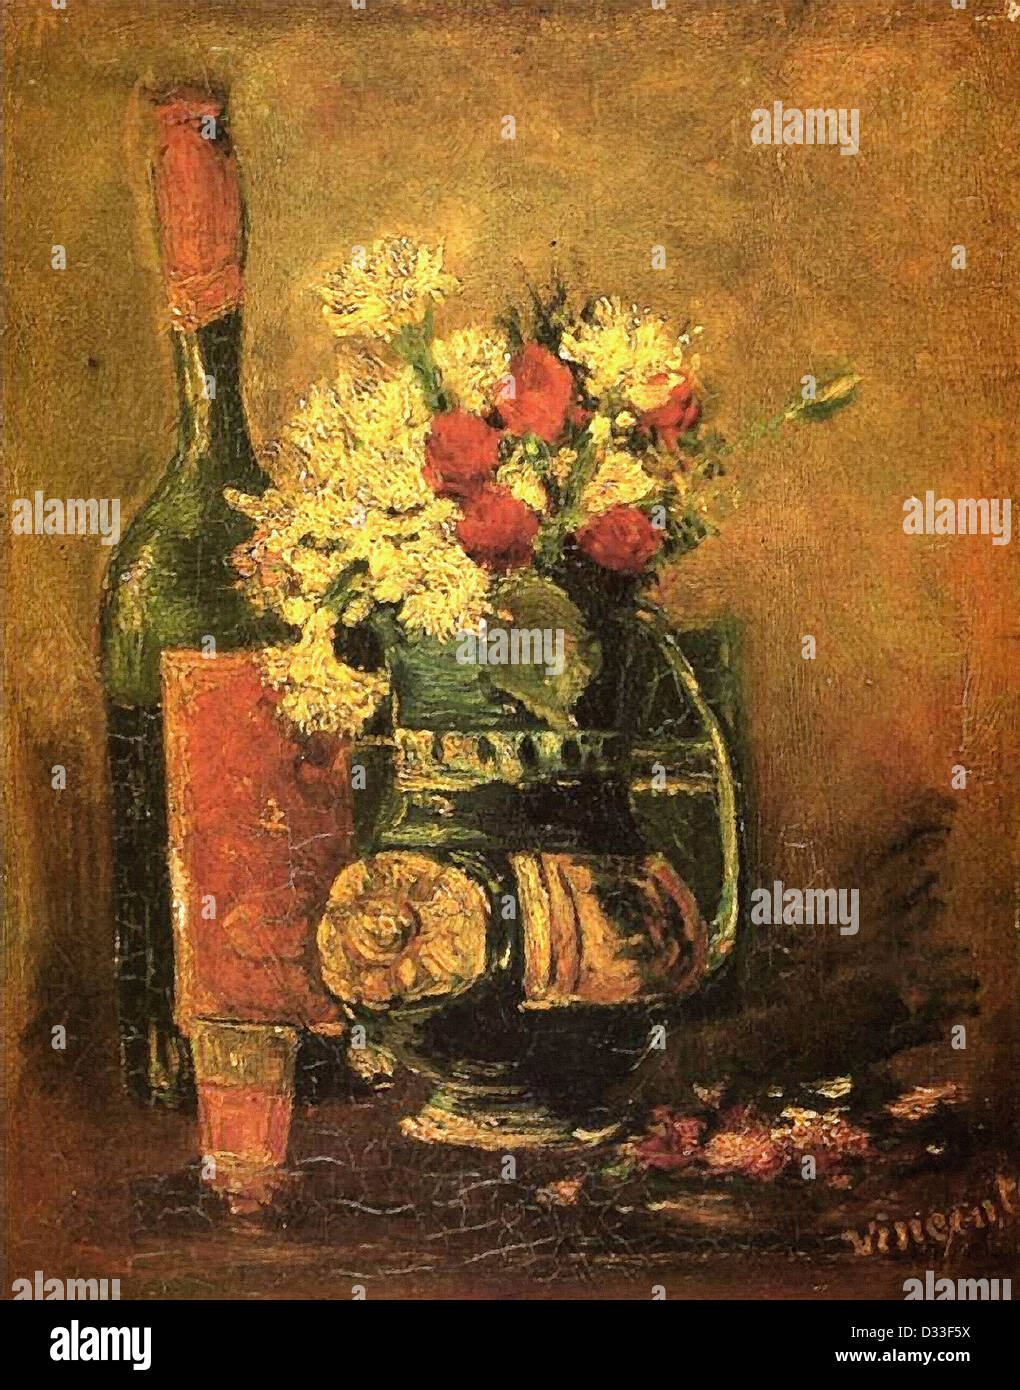 Vincent van Gogh: Vase with Carnations and Bottle. 1886. Oil on canvas. Rijksmuseum Kröller-Müller, Otterlo, Netherlands. Stock Photo